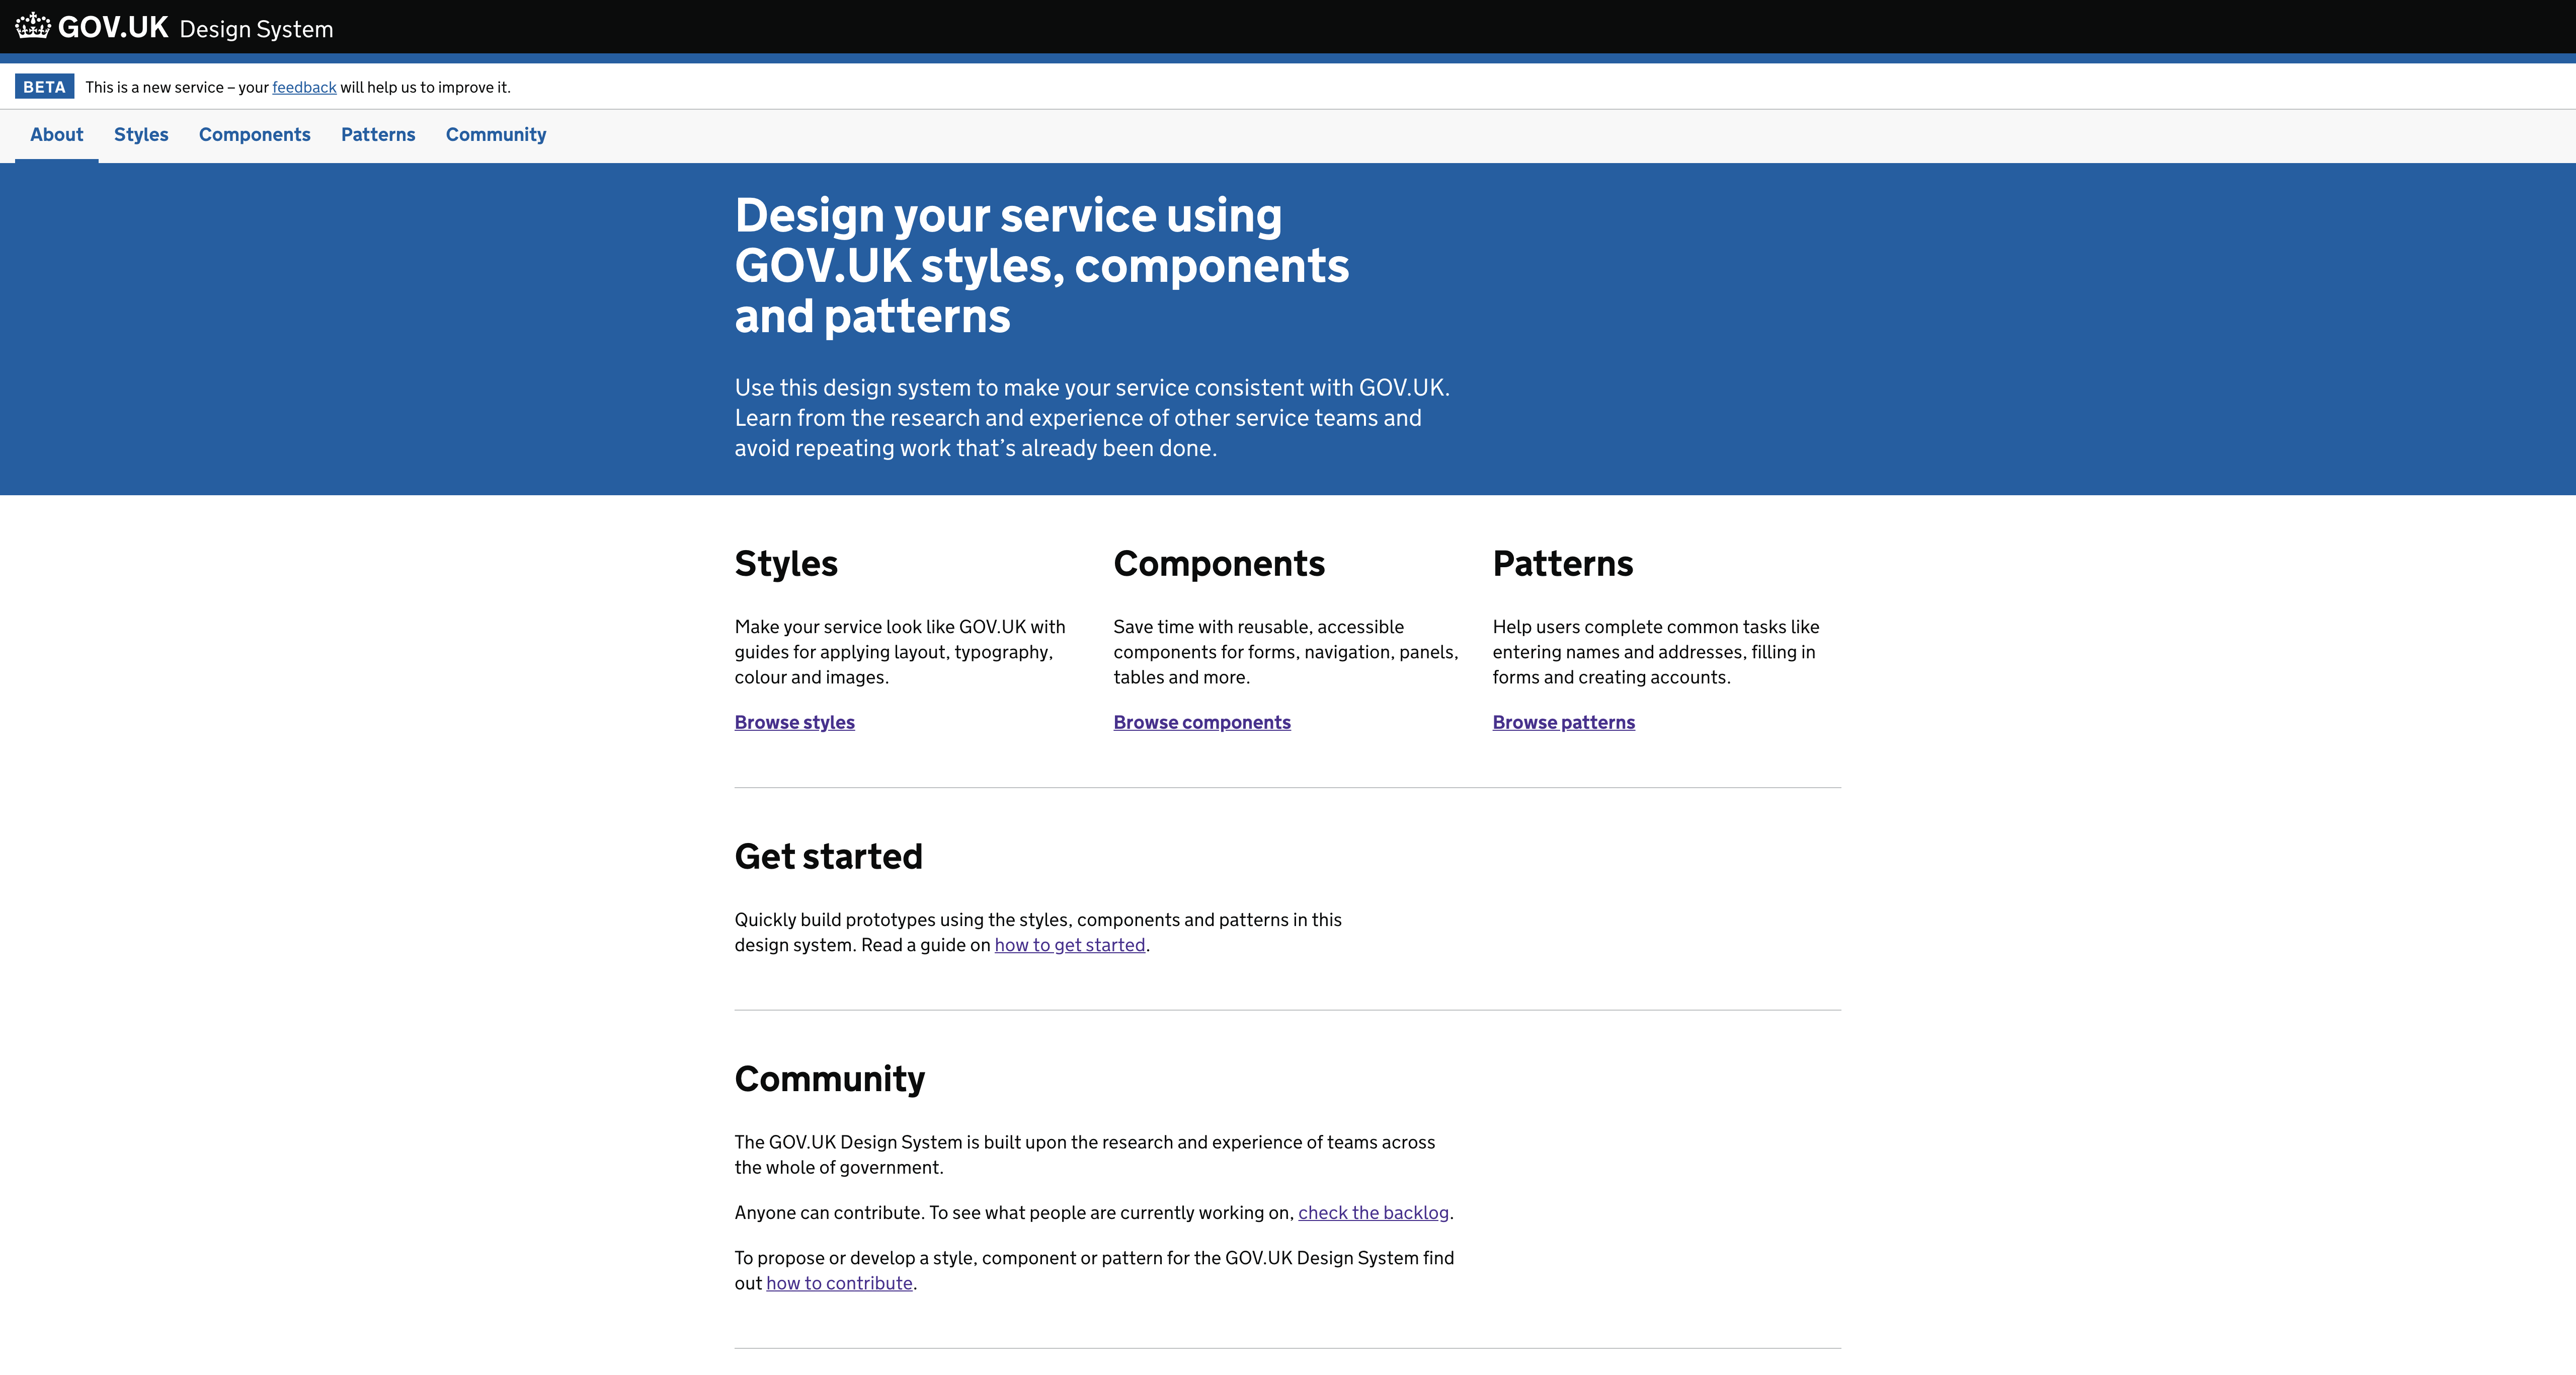 Introducing the GOV.UK Design System - Government Digital Service